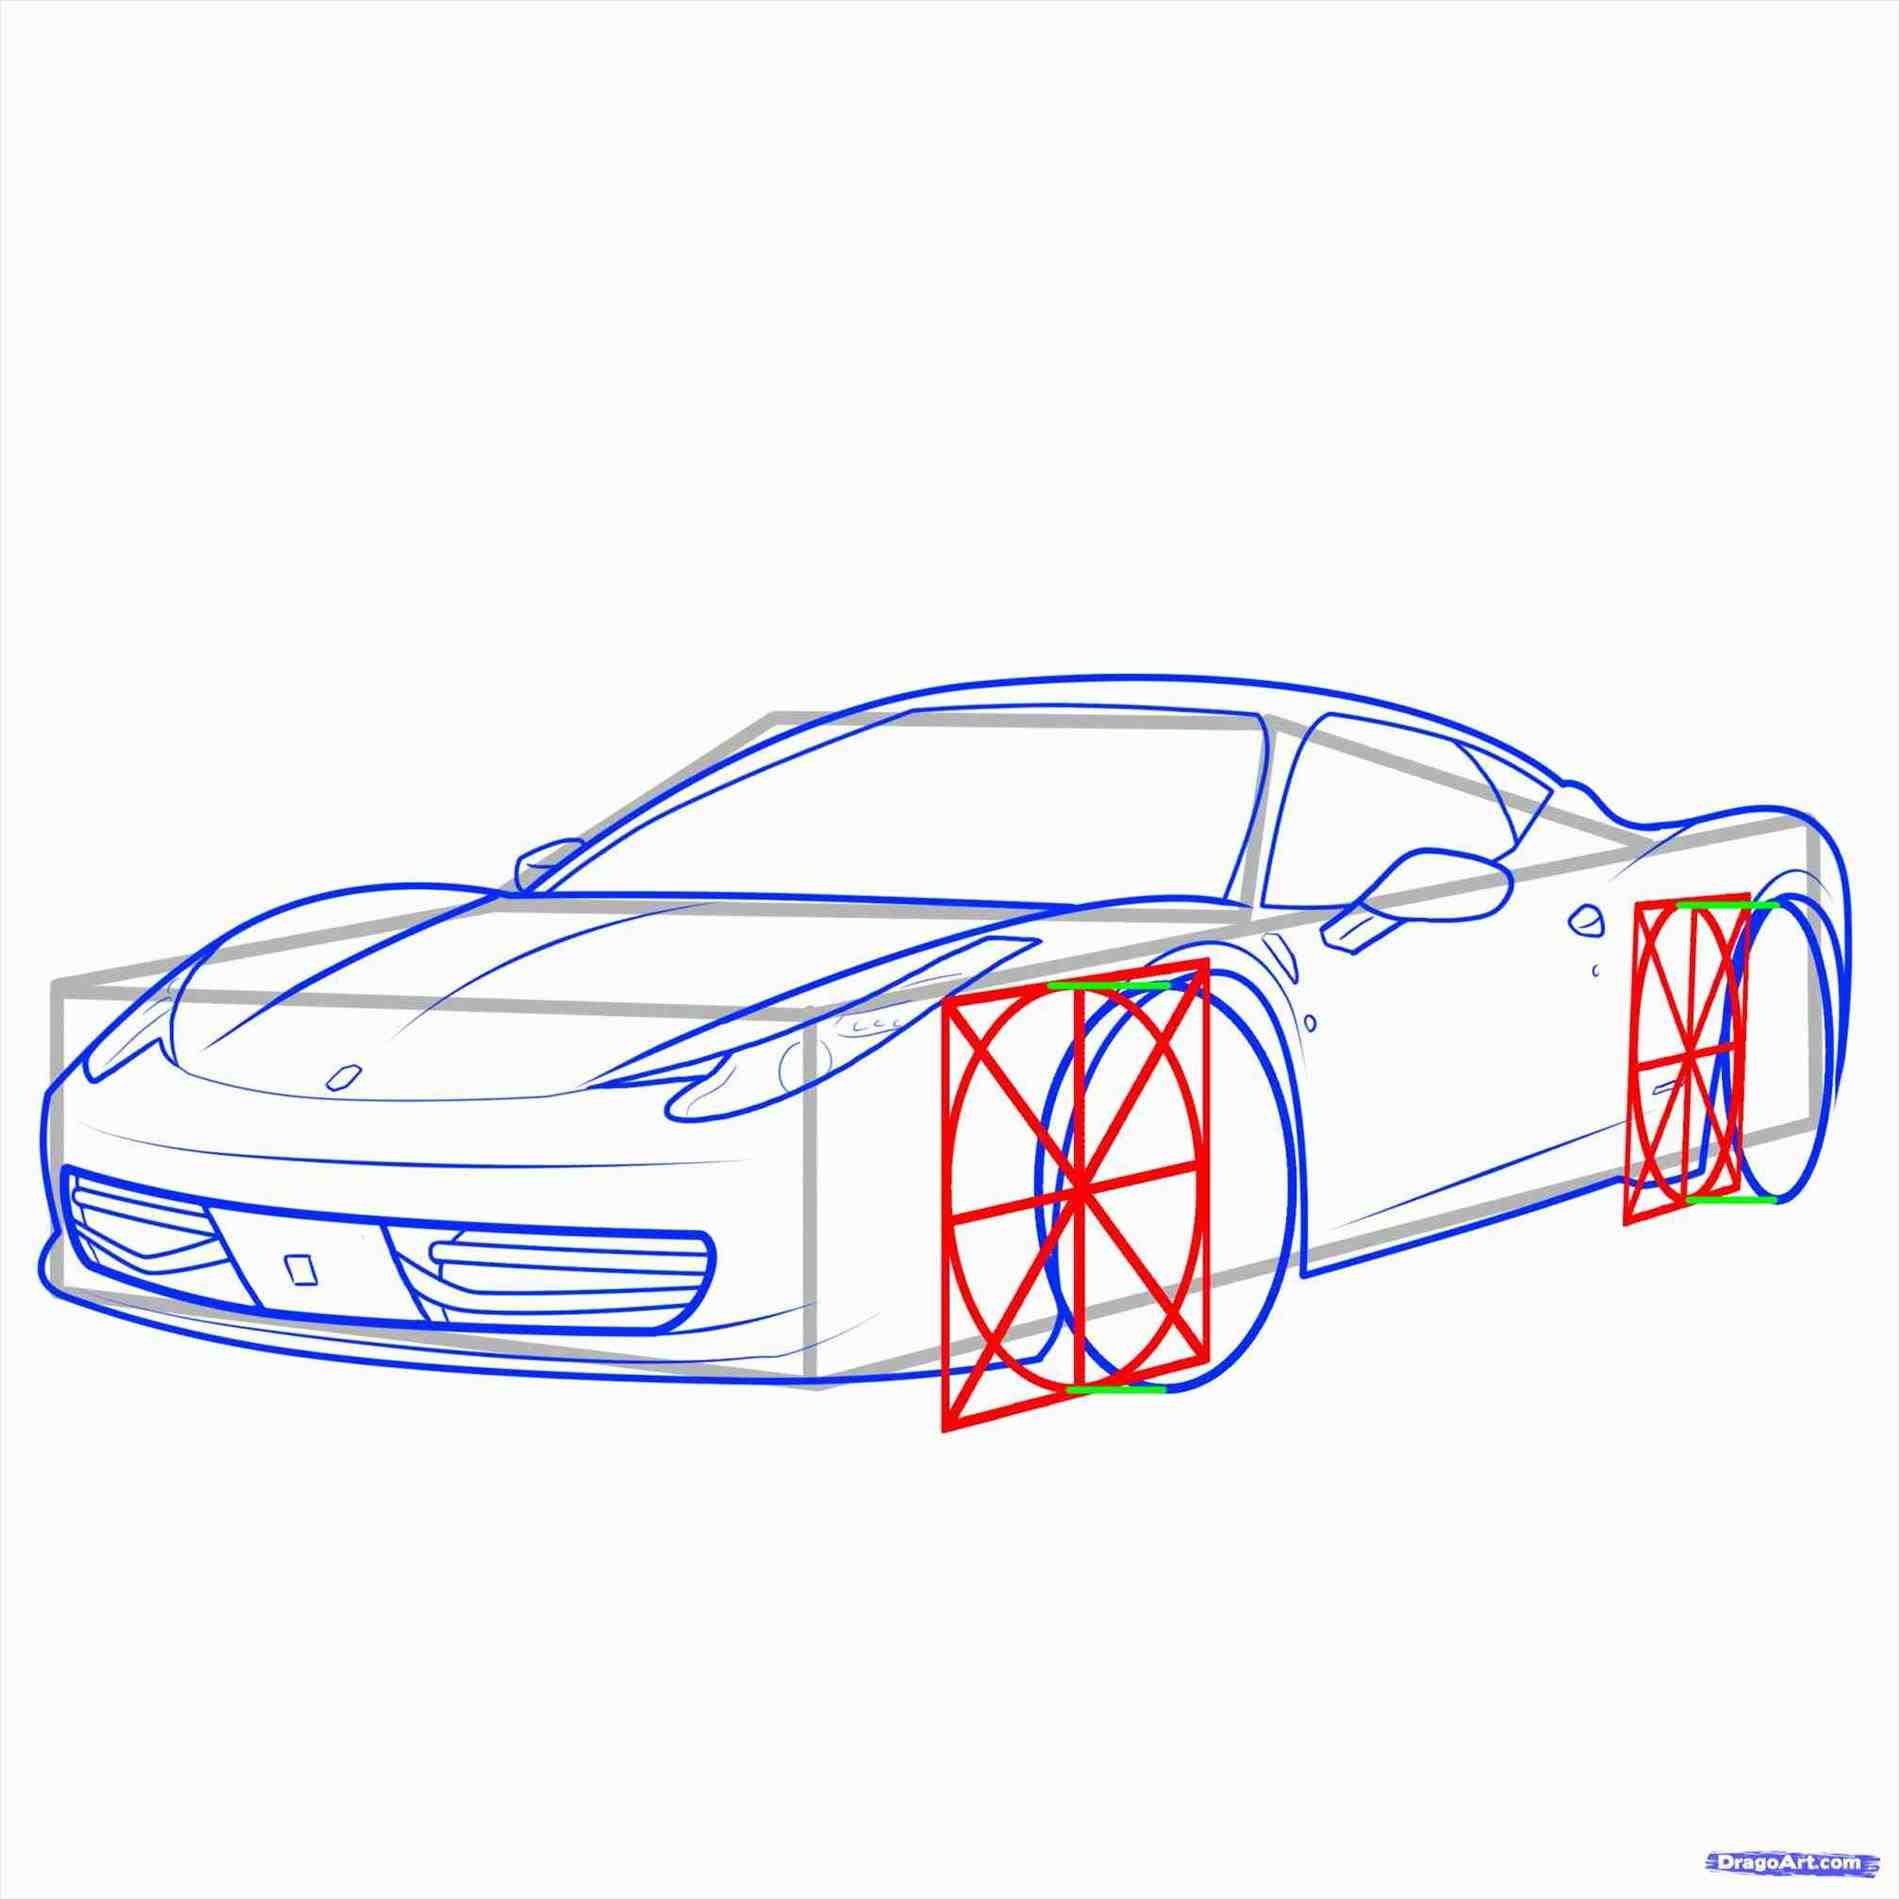 Easy race car drawing Idea